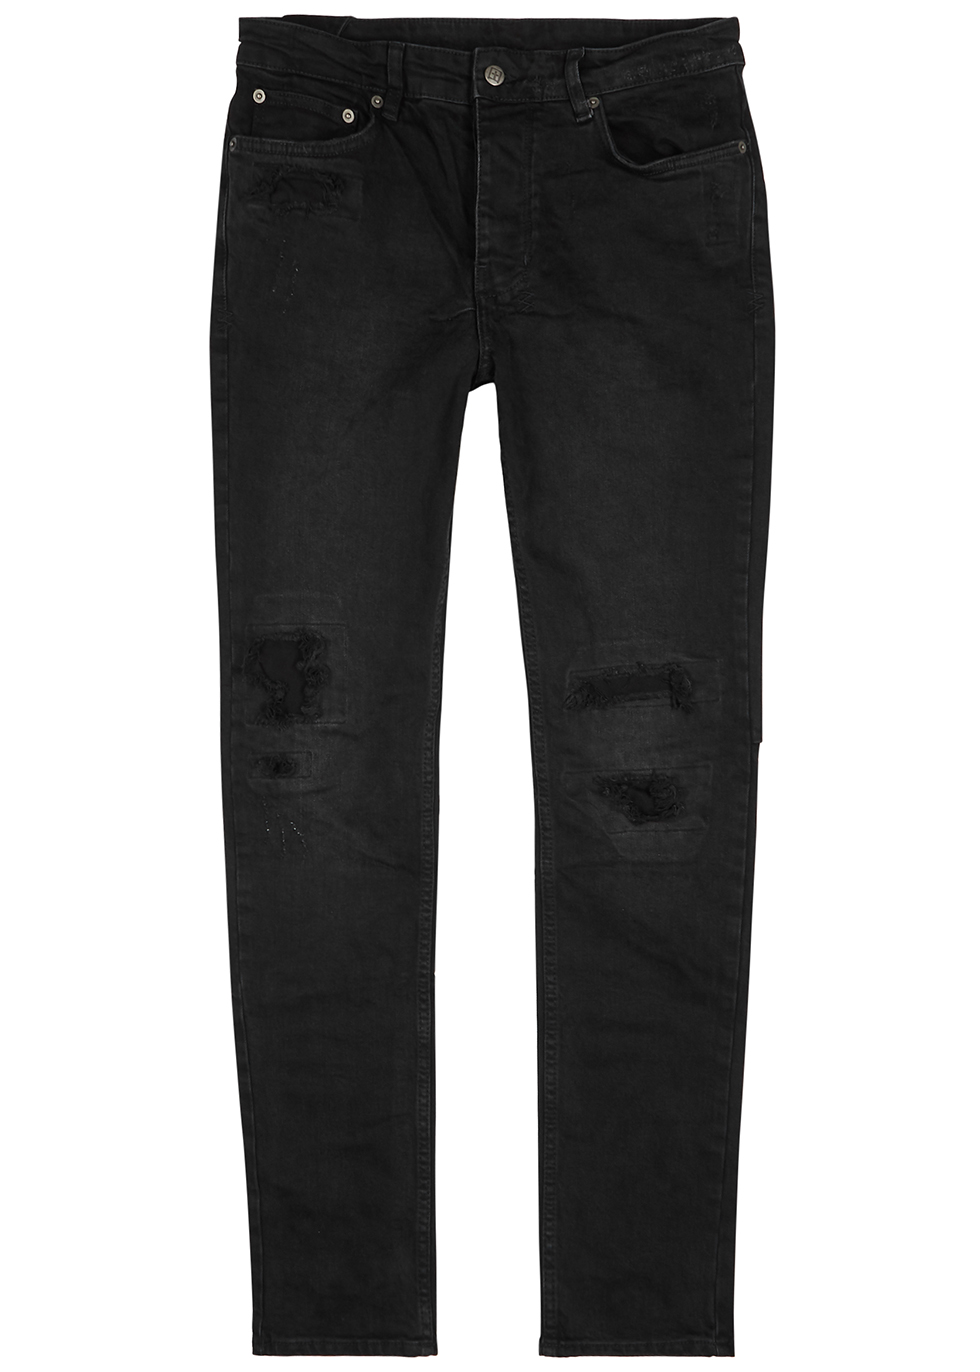 mens black ripped designer jeans